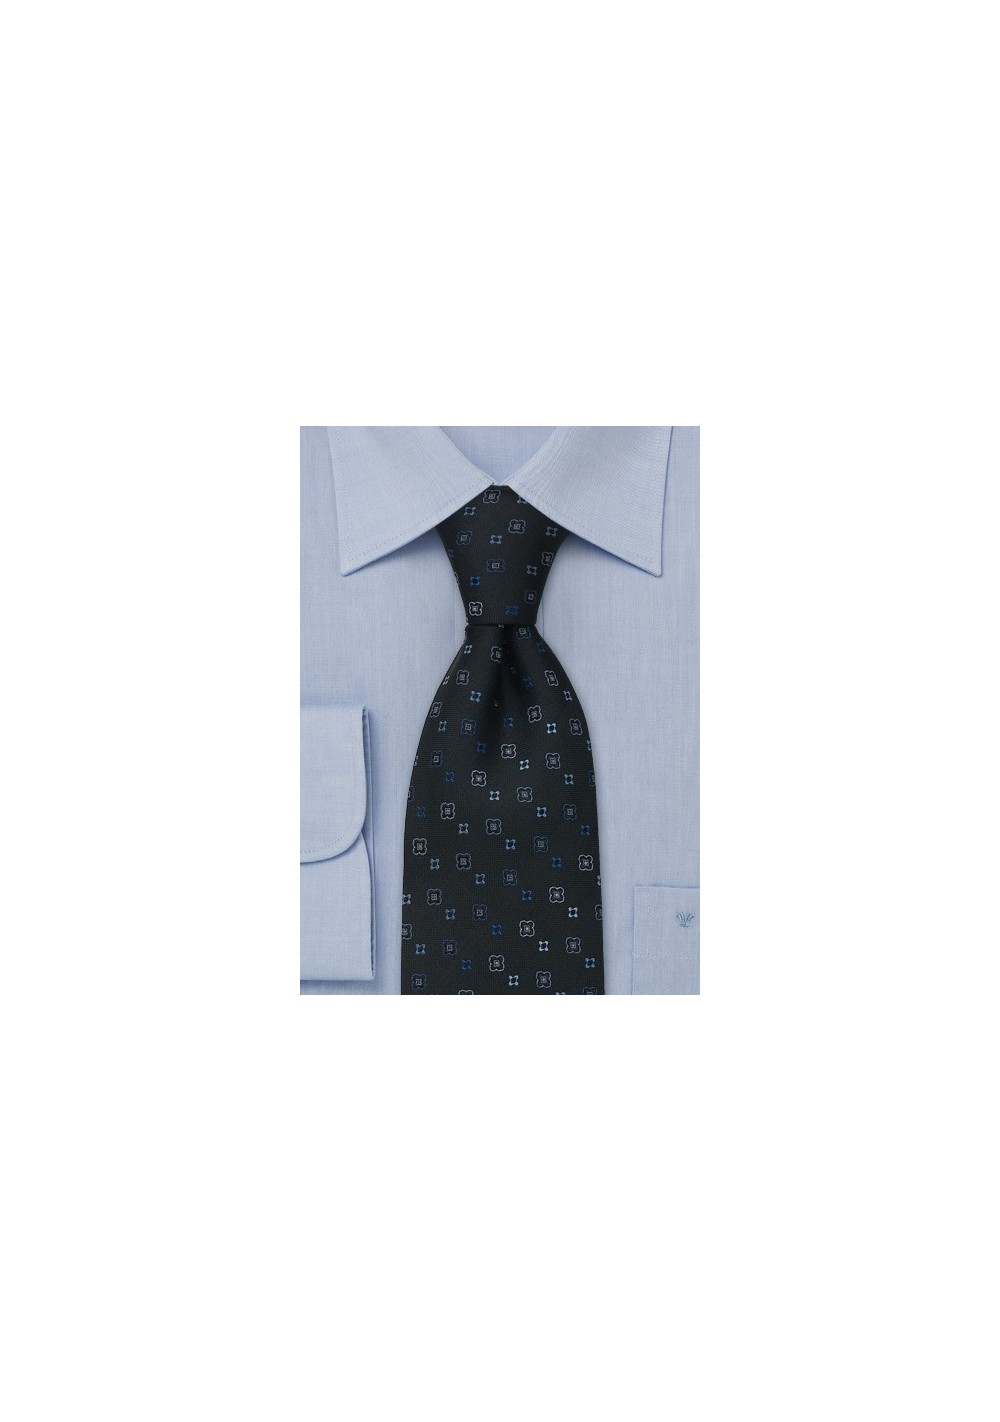 Brand name neckties - Black silk tie with floral pattern